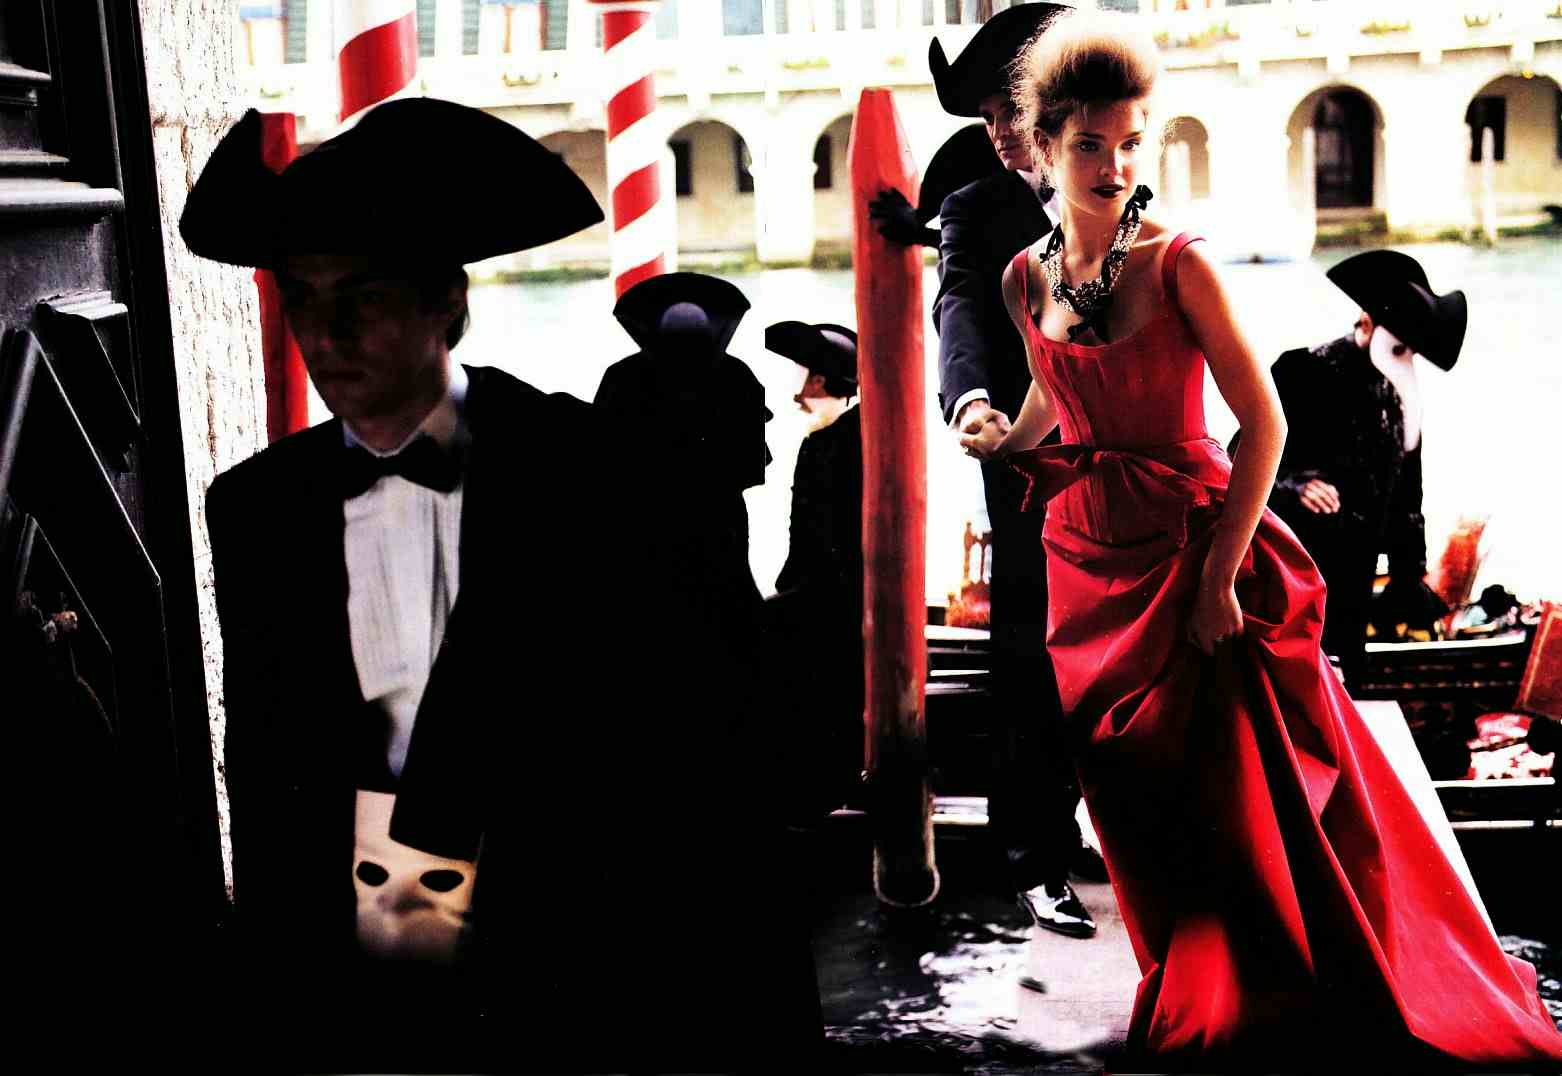 VOGUE USA - 2005
Photographer: Mario Testino
Model: Natalia Vodianova
Stylist: Grace Coddington
Location: Venice - Italy